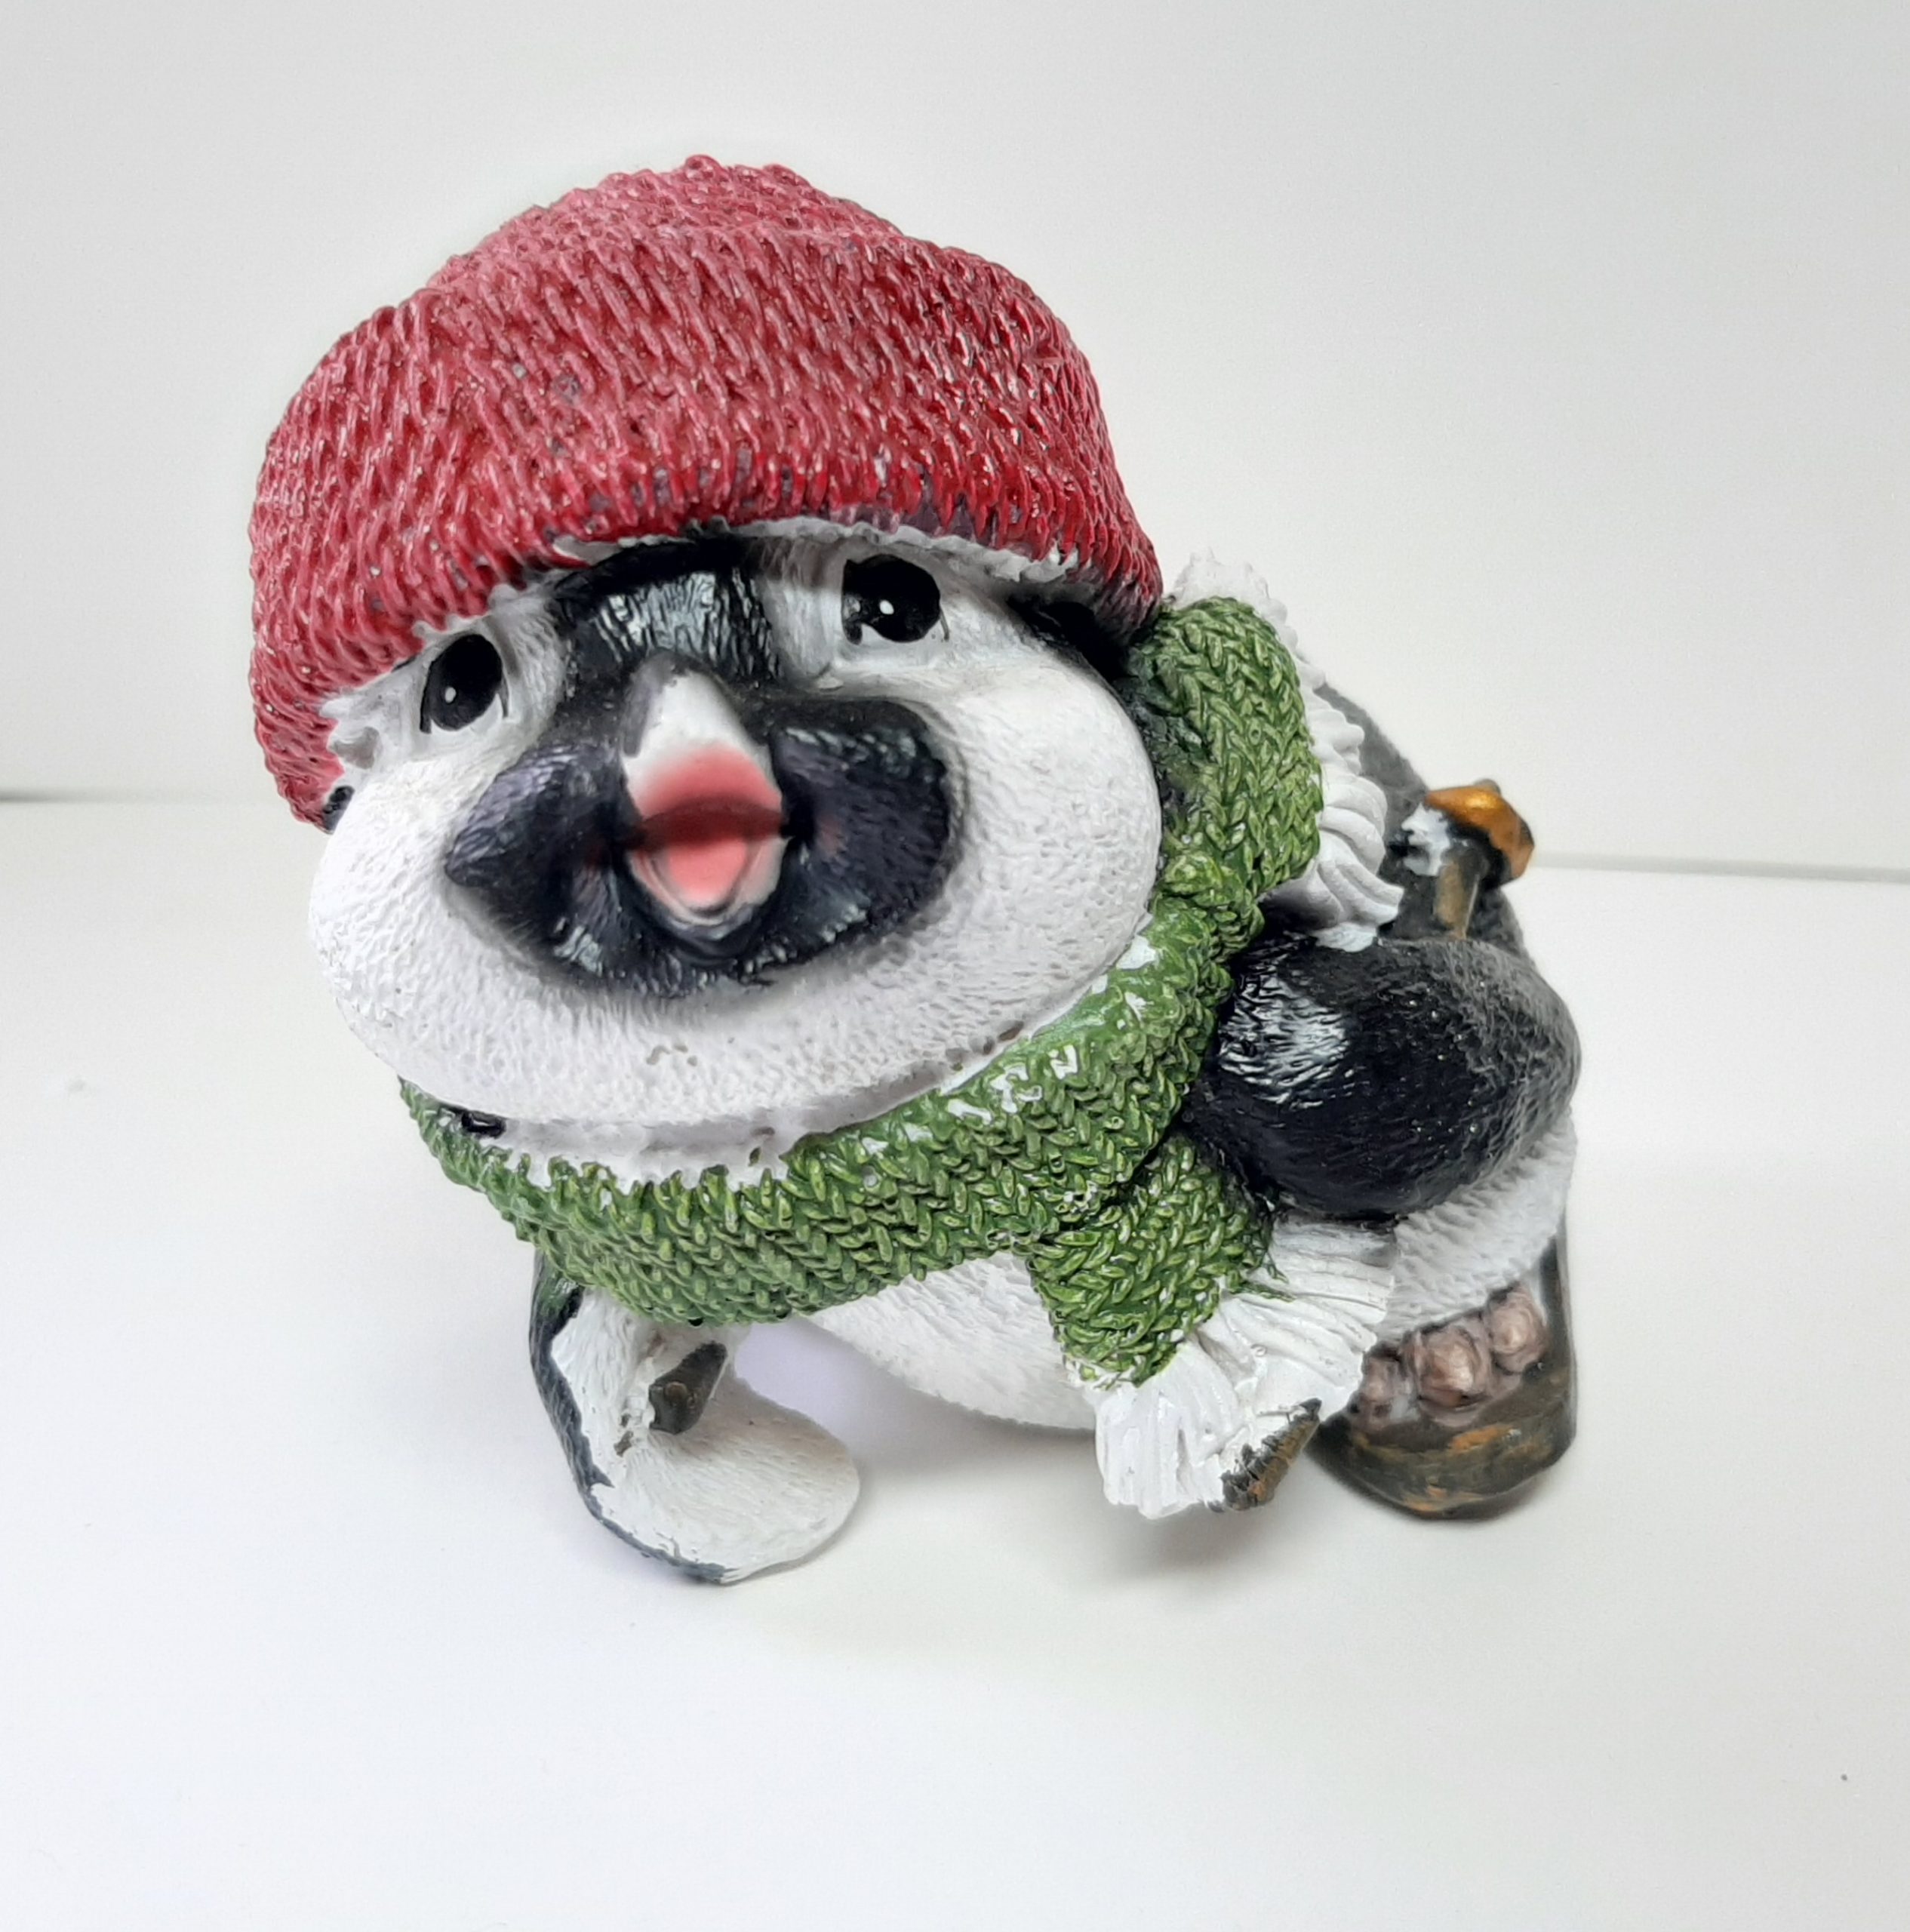 Scarp timer Sociaal Beeldje pinguin op skis met rode muts en groene sjaal voorover